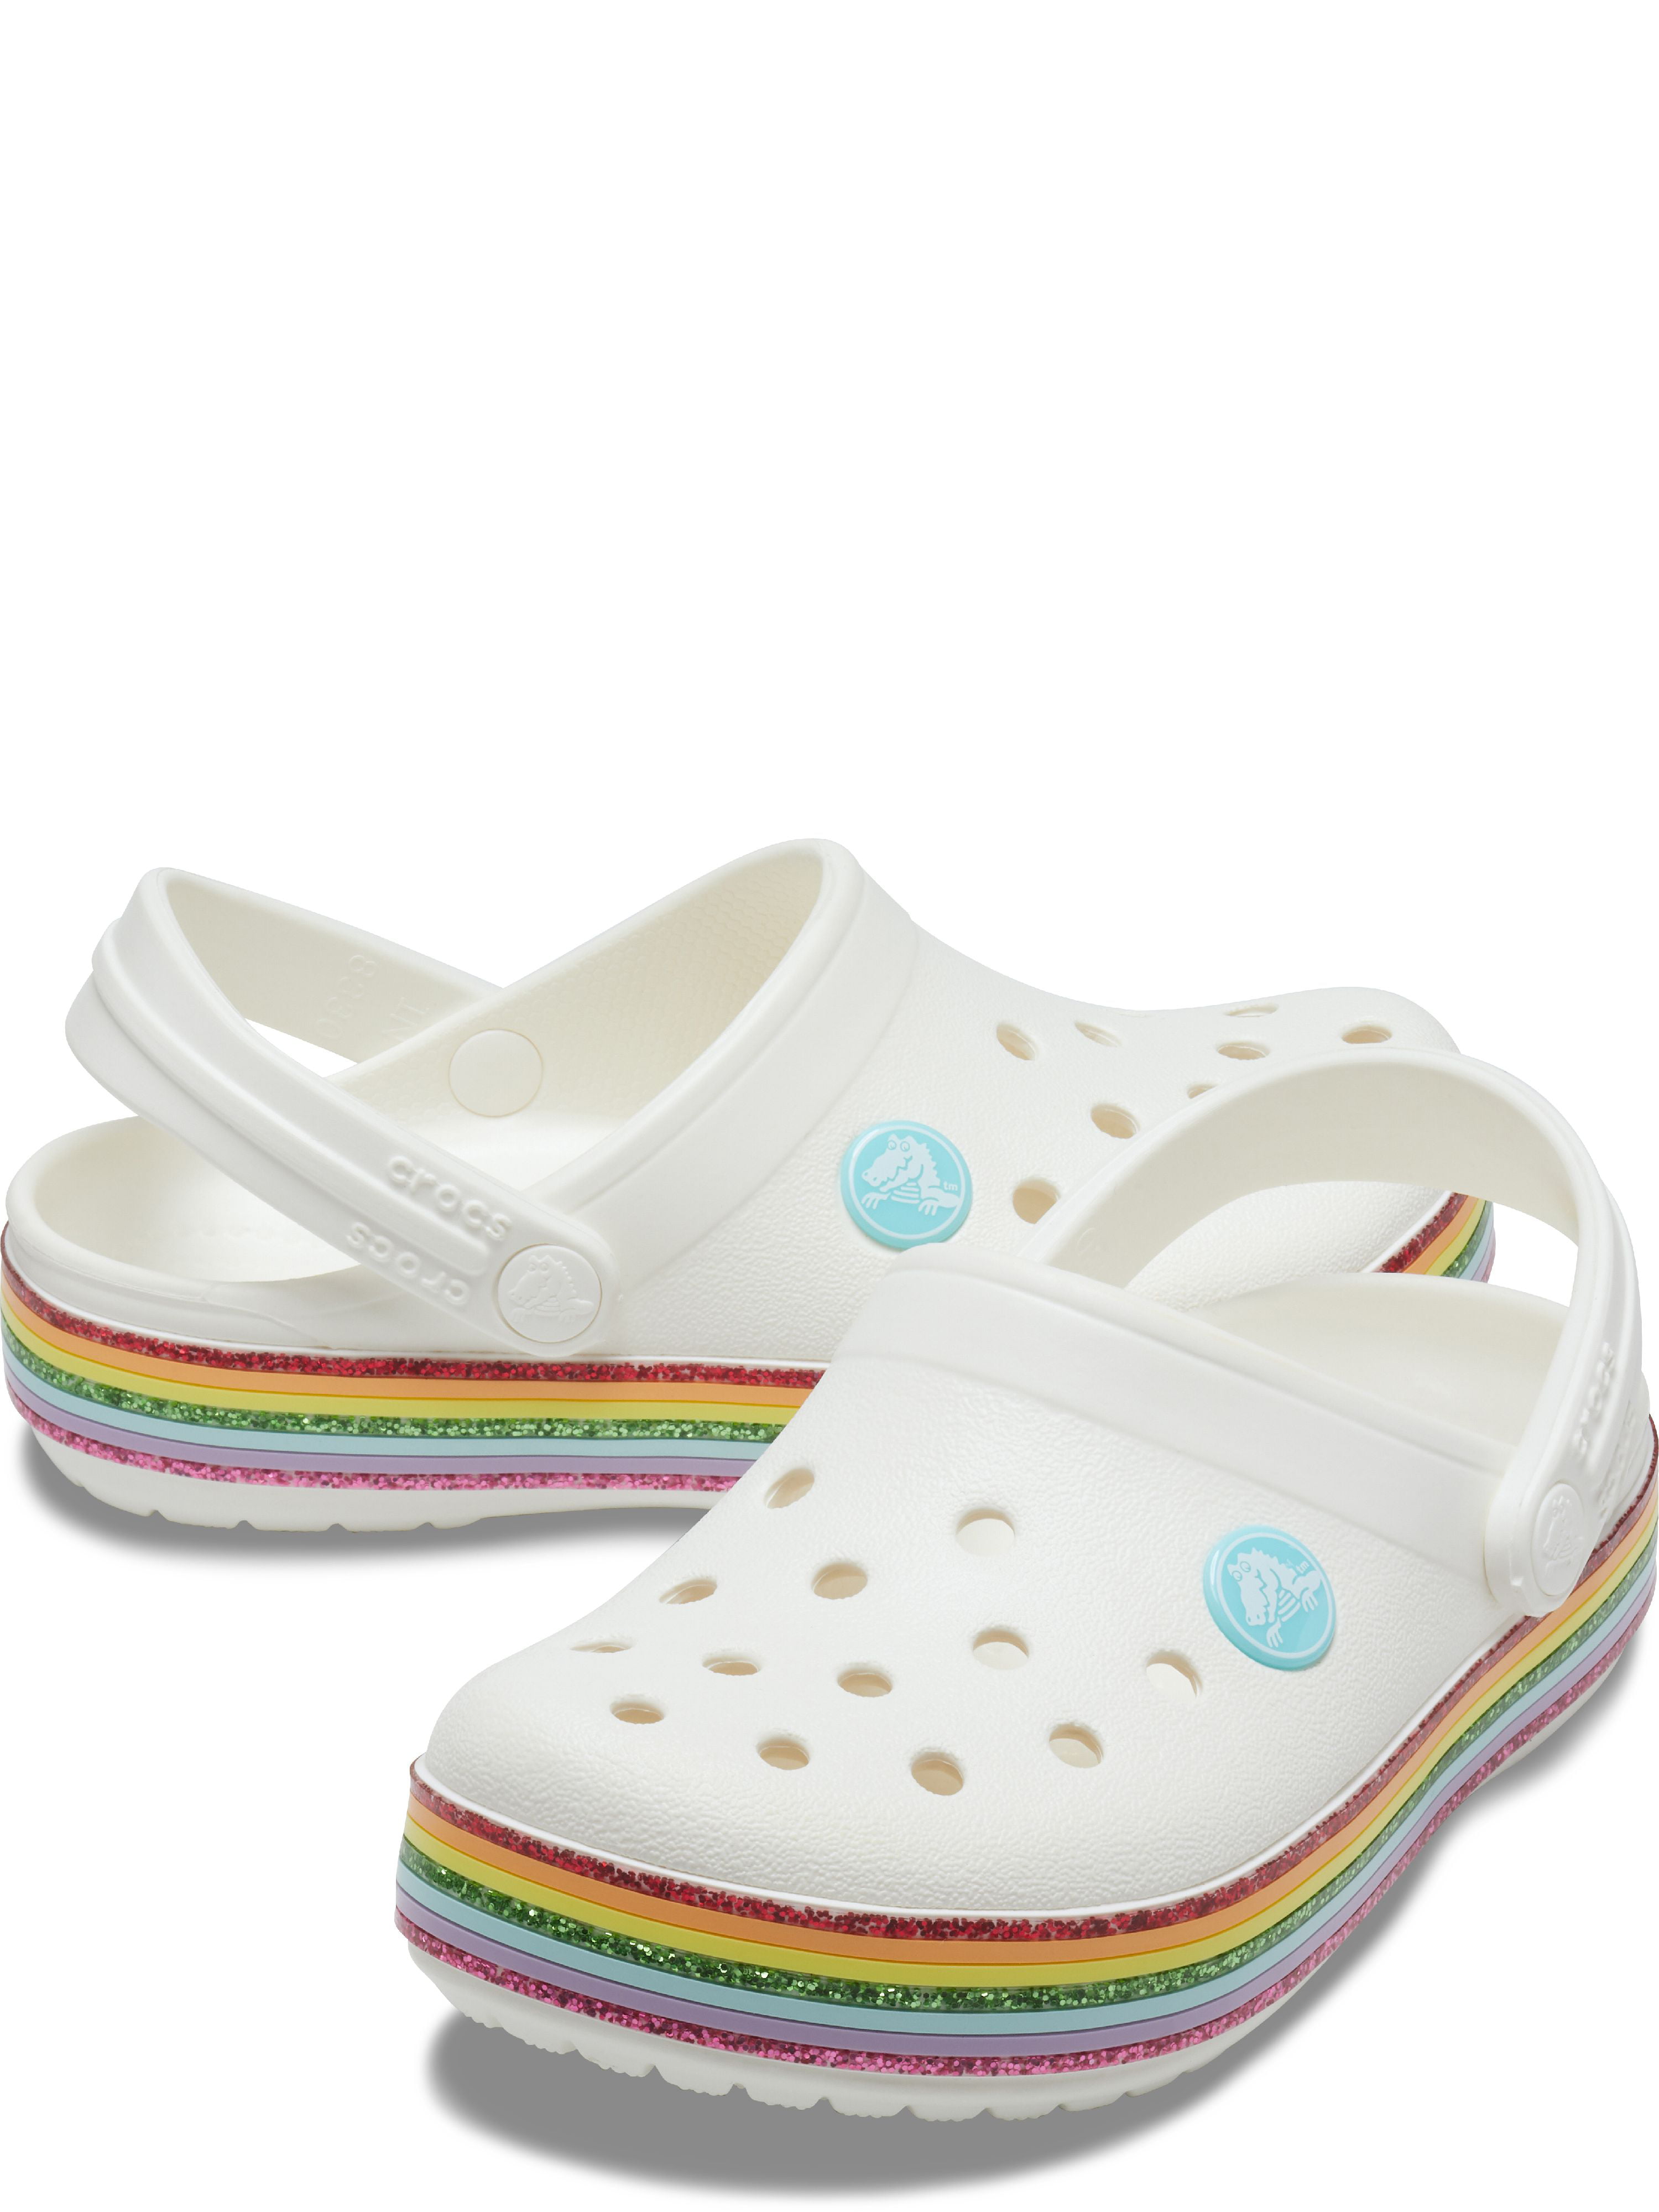 Bambini Crocs Crocband Rainbow Glitter Clog Kids Zoccoli Unisex